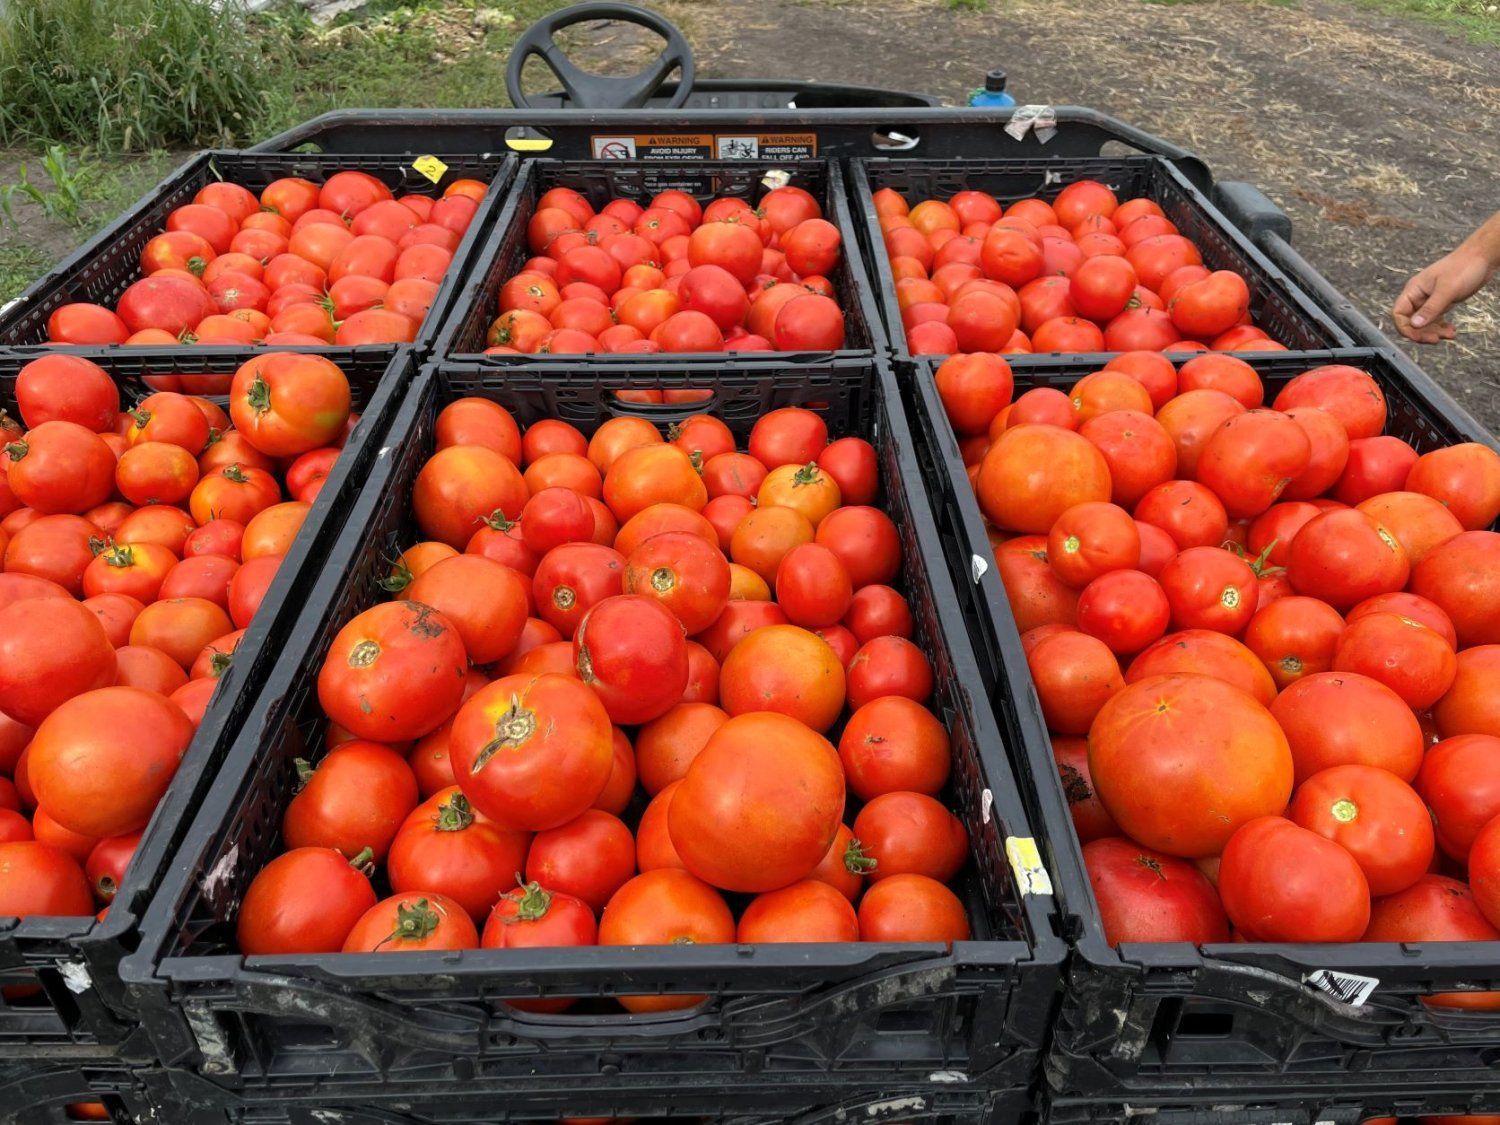 Next Happening: Peak Tomatoes & U of MN Tomato Study on Our Farm